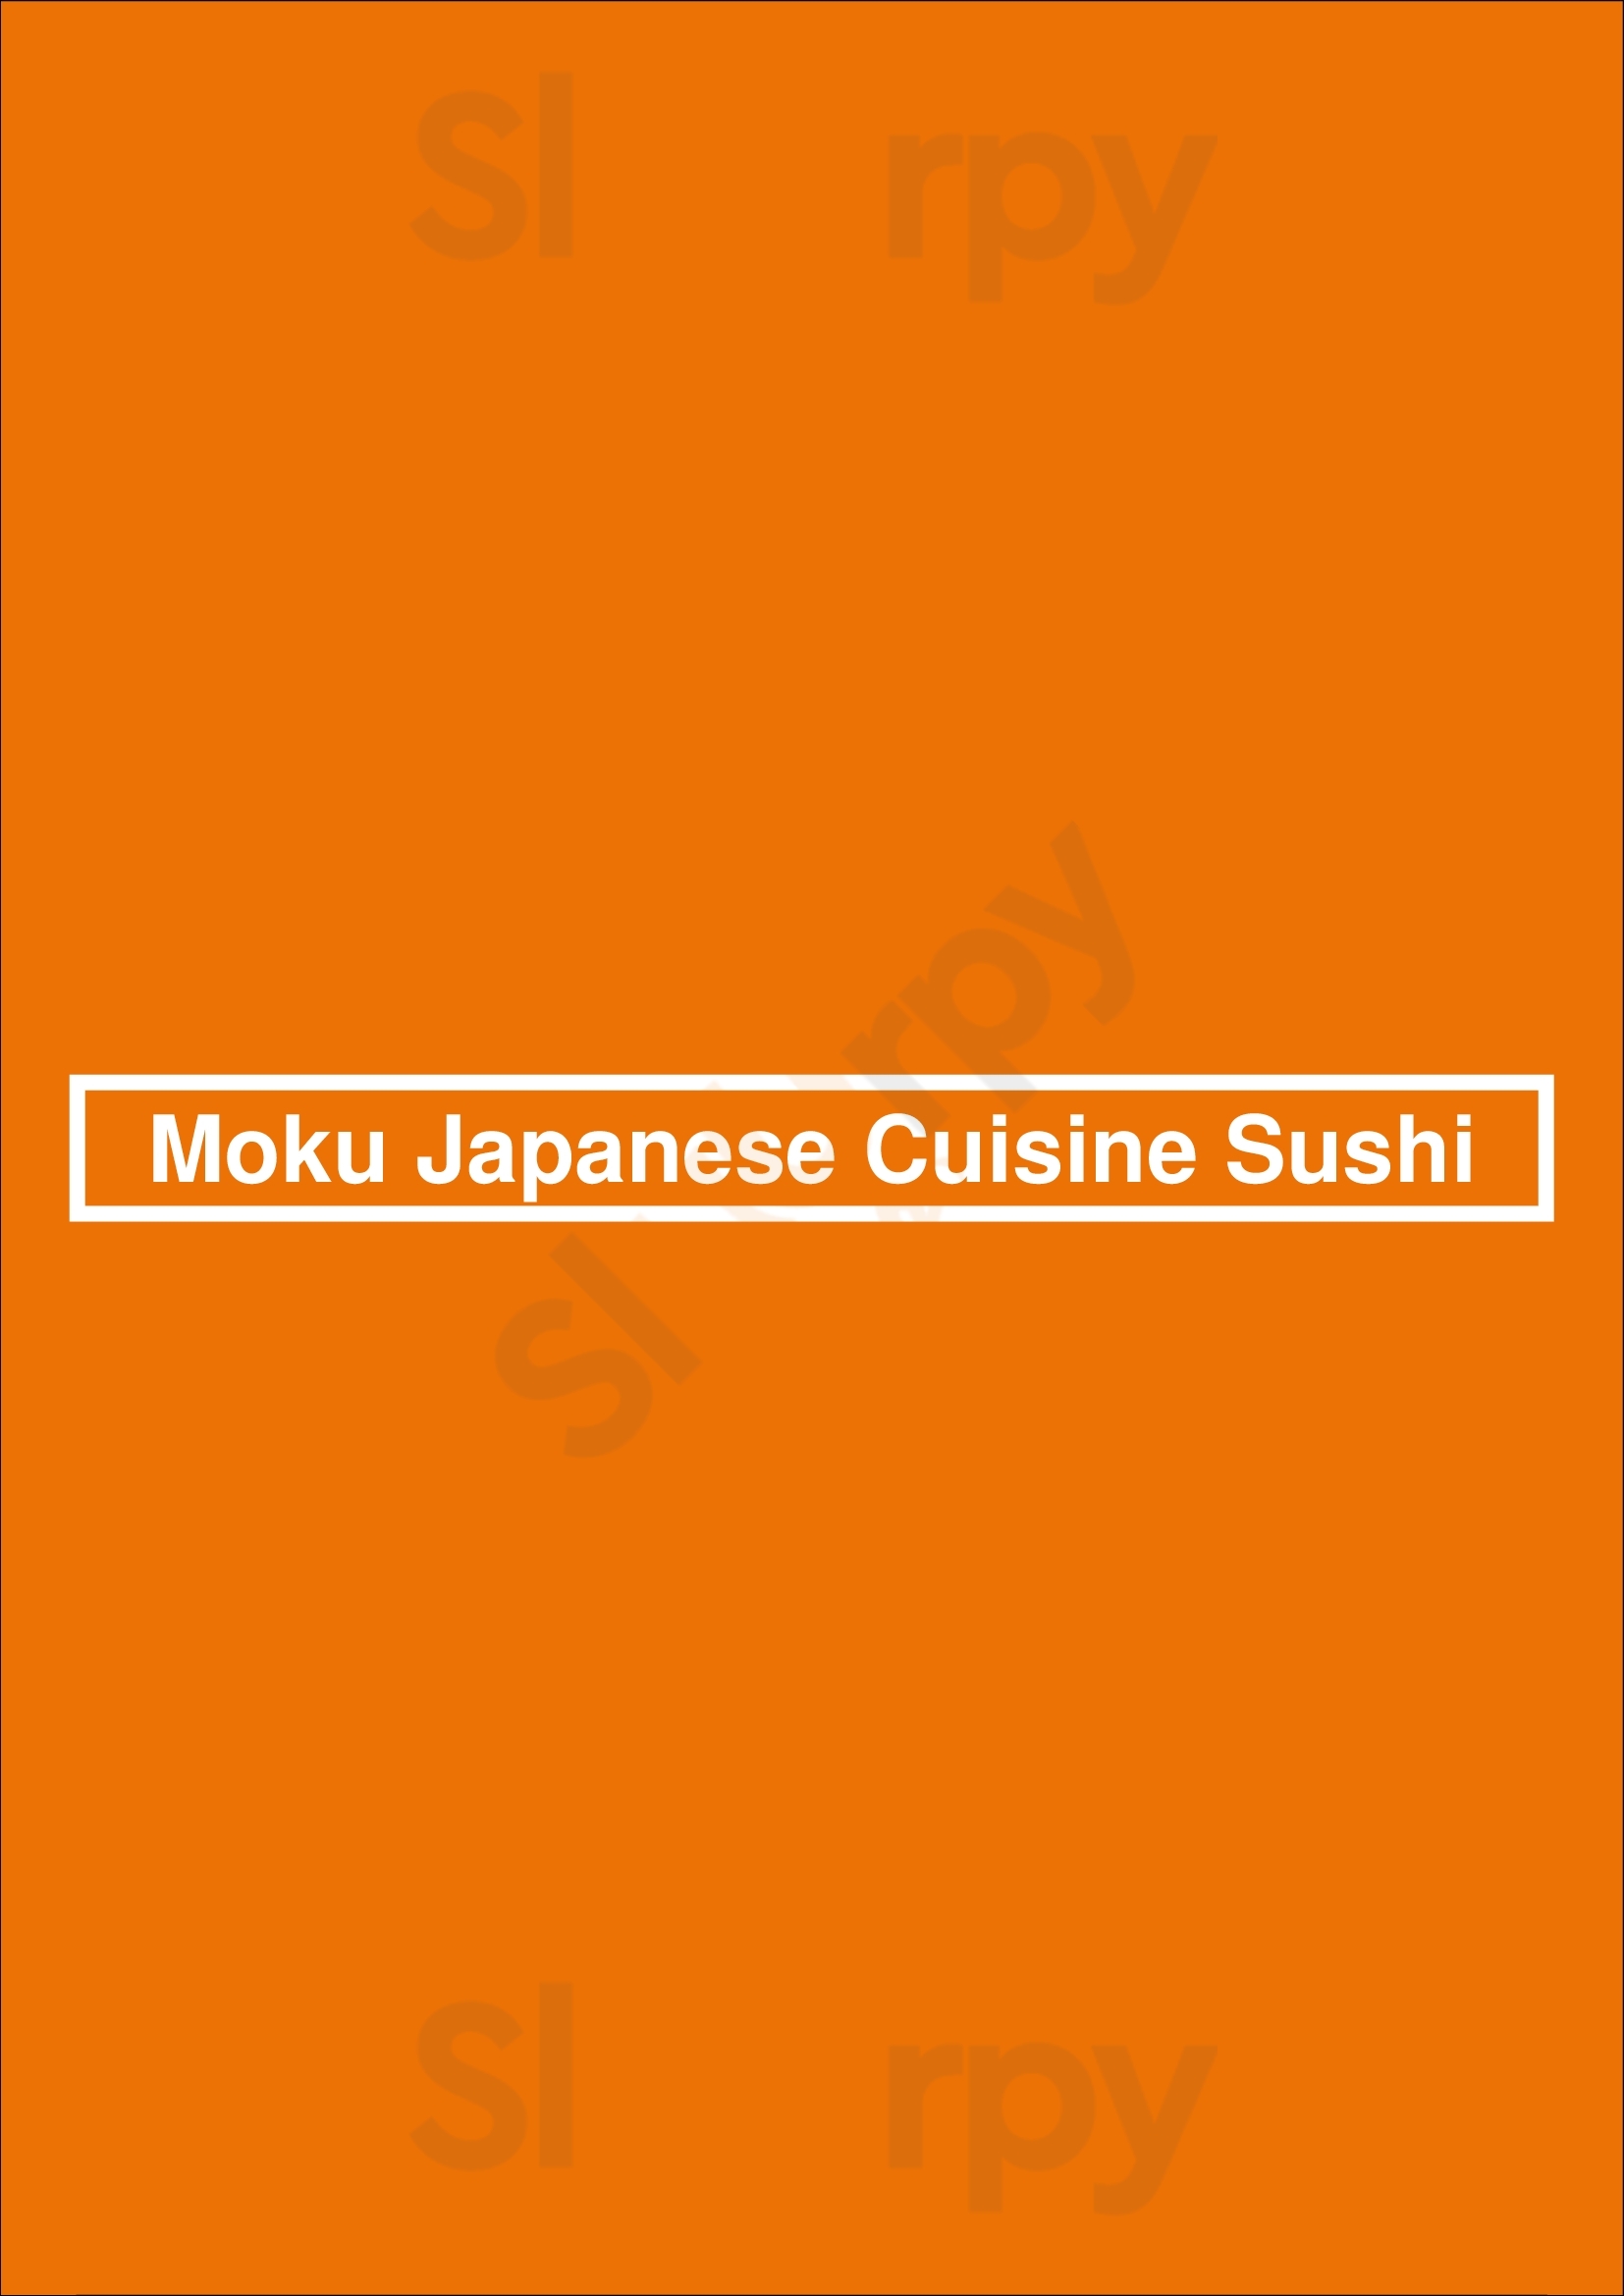 Moku Japanese Cuisine Sushi Los Angeles Menu - 1